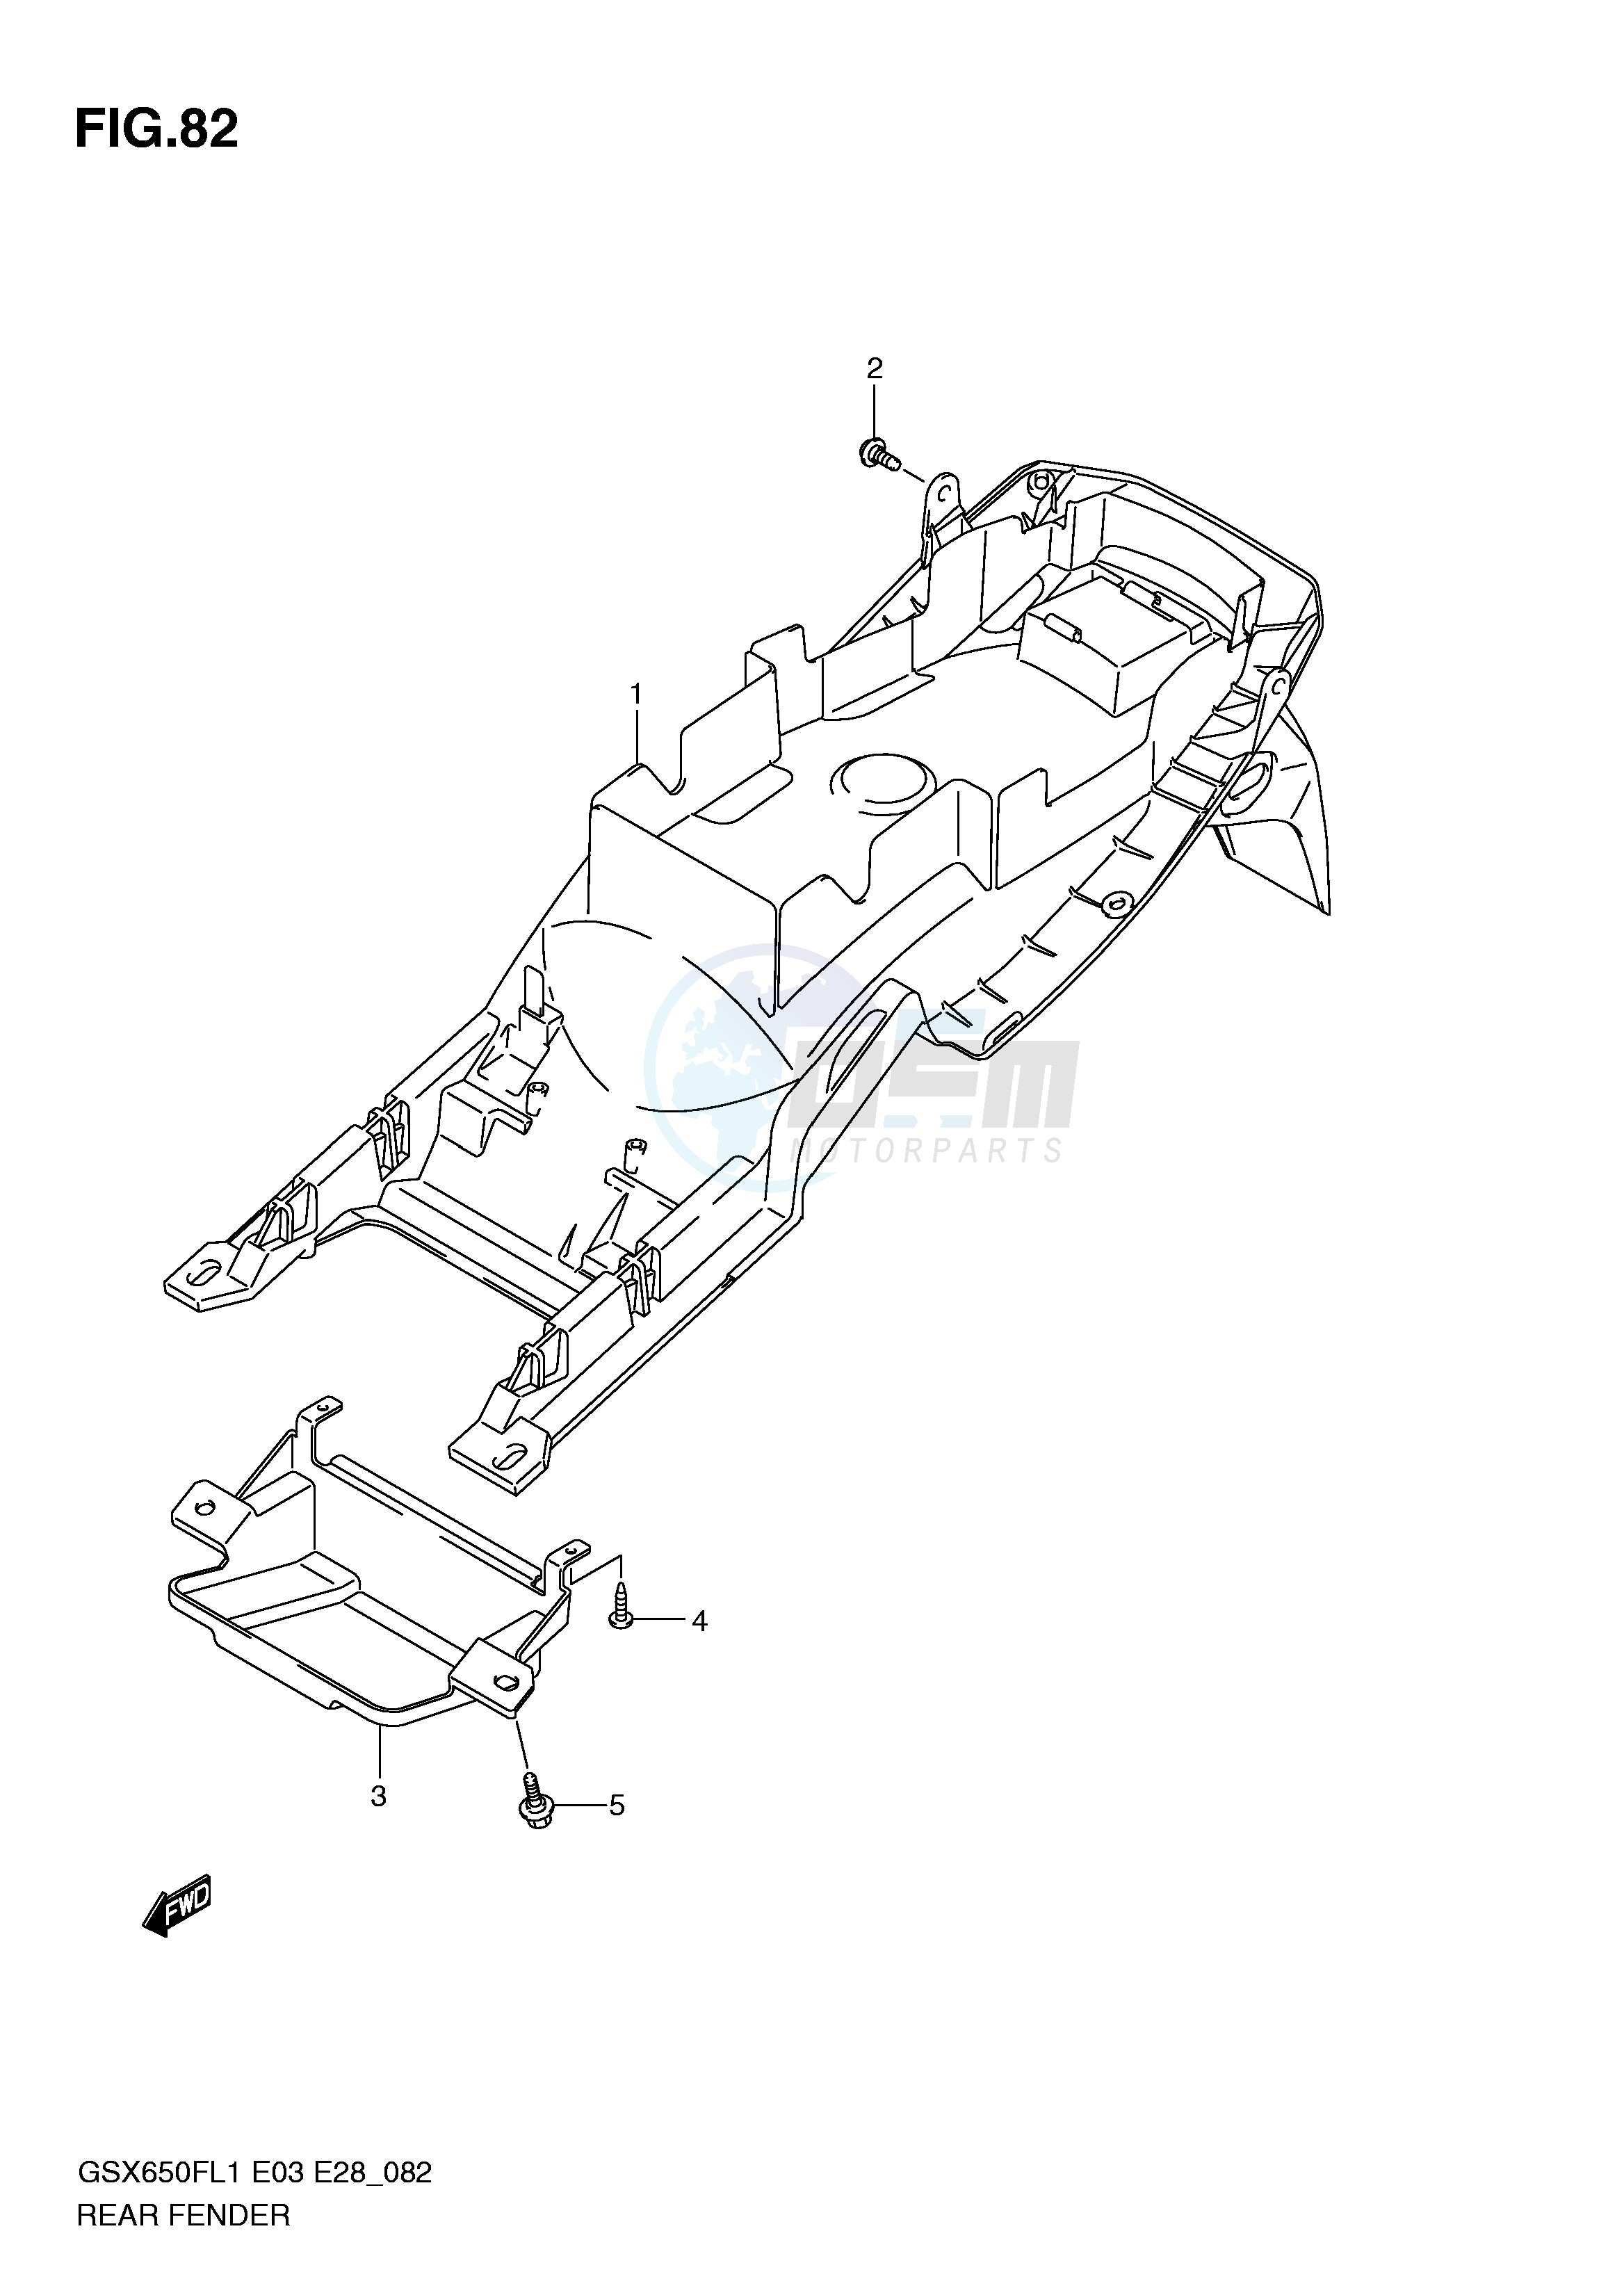 REAR FENDER (GSX650FL1 E28) blueprint